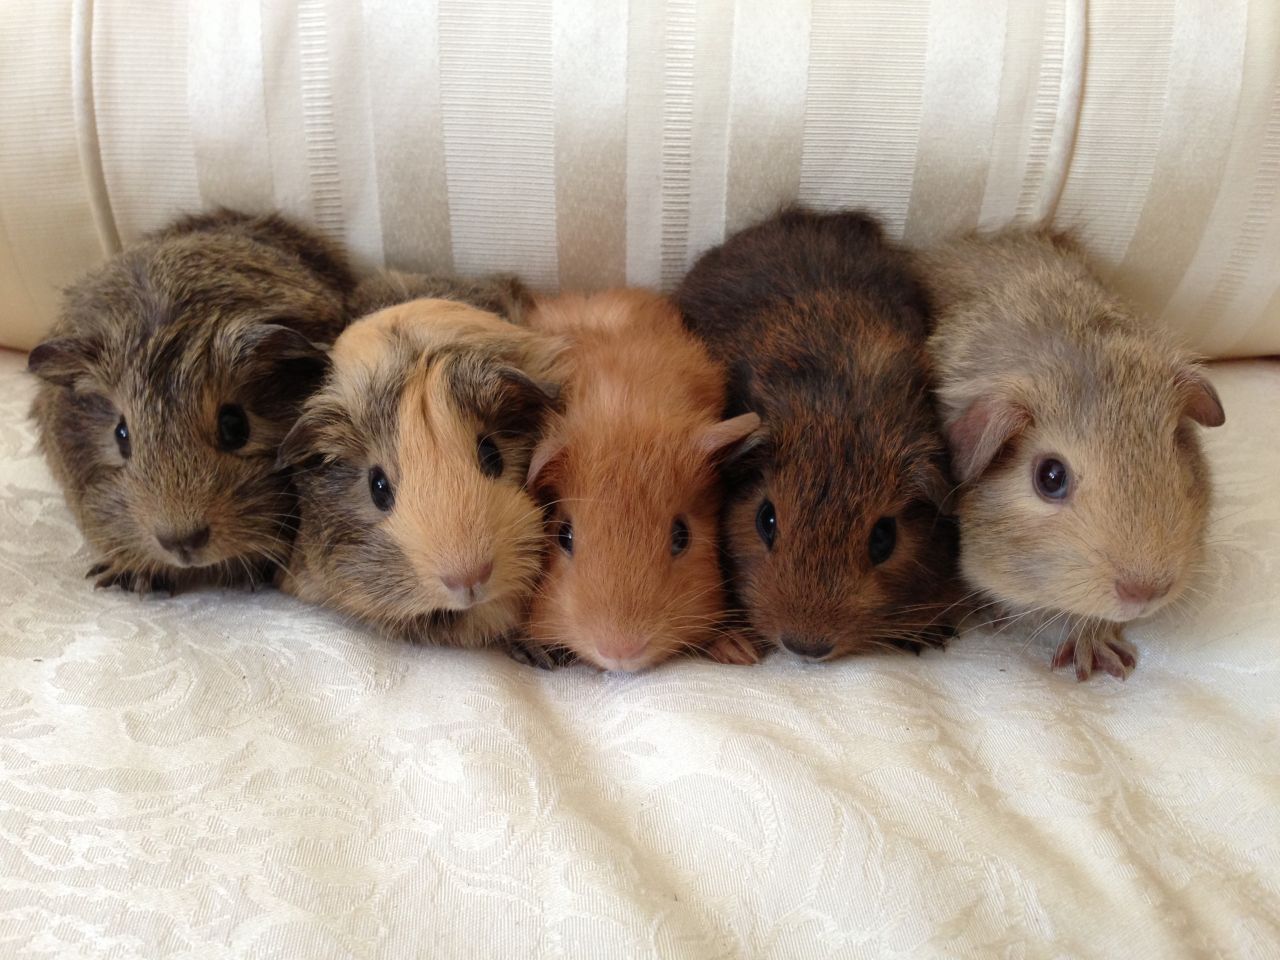 How to care for guinea pig offspring